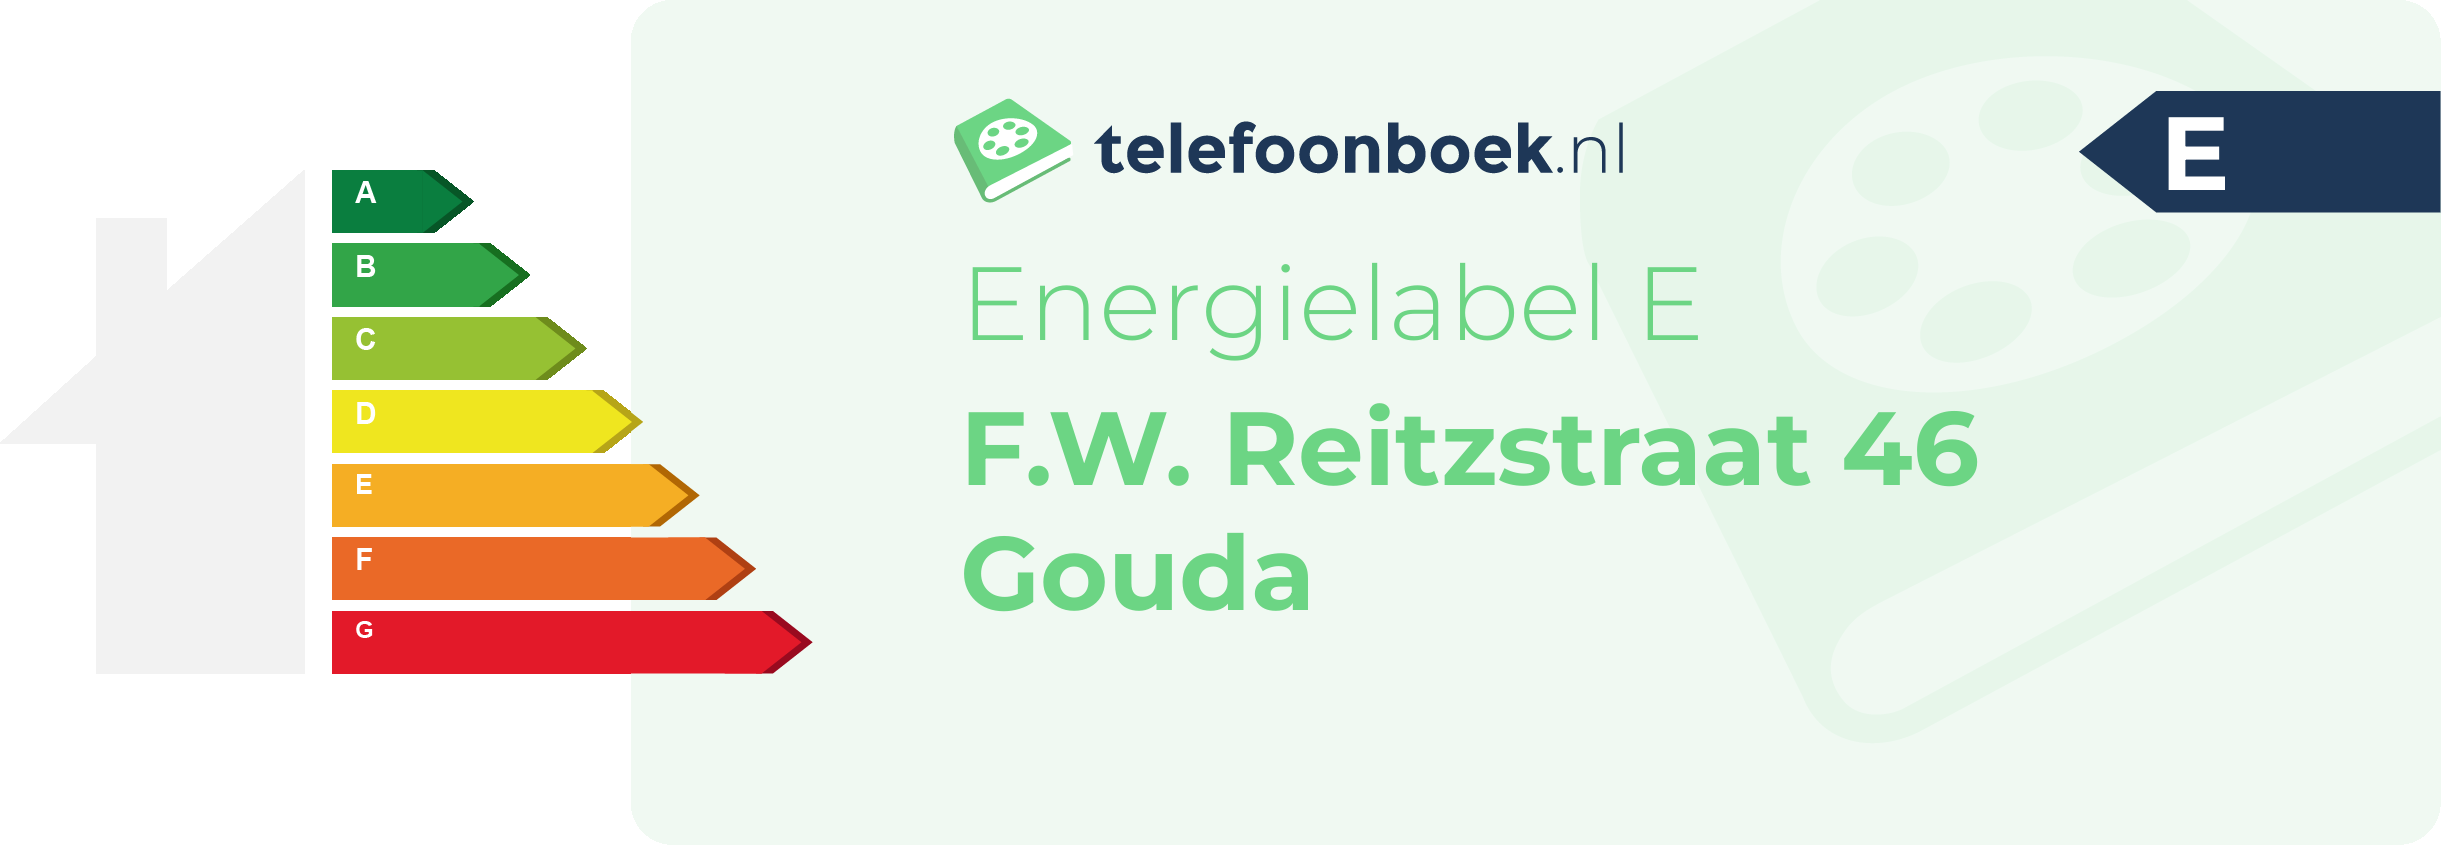 Energielabel F.W. Reitzstraat 46 Gouda